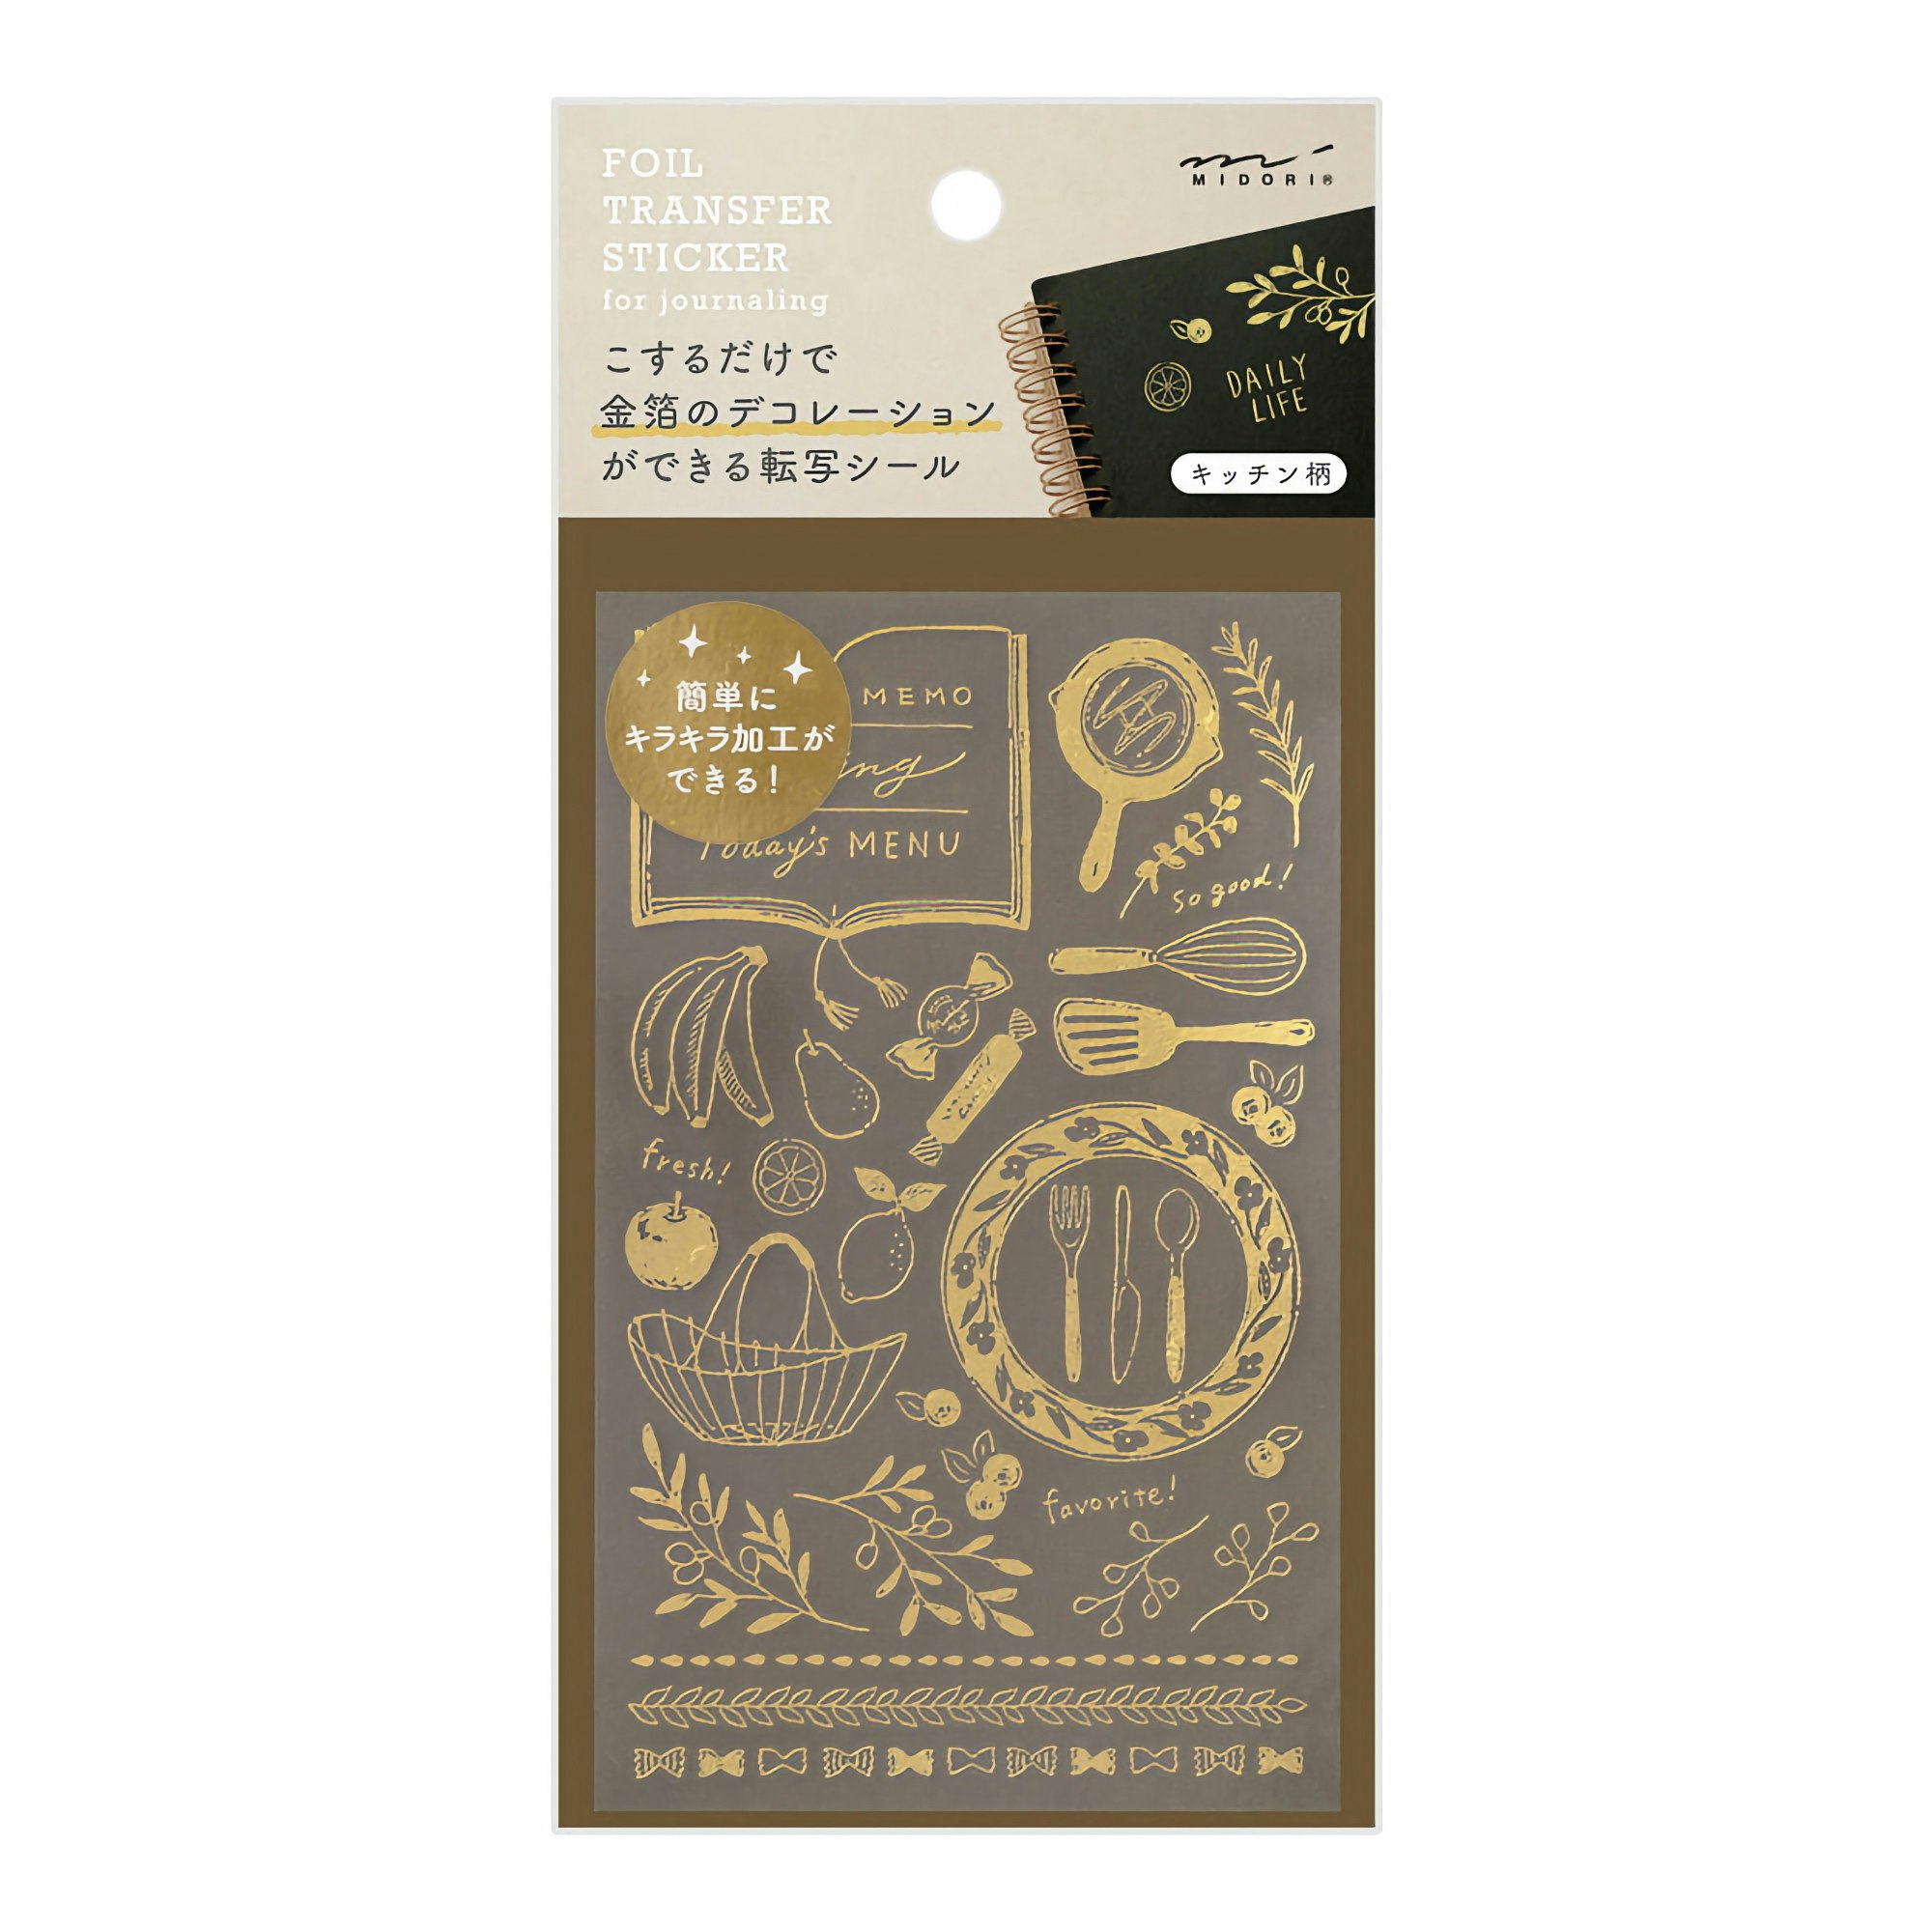 Midori Transfer Sticker Foil Kitchen